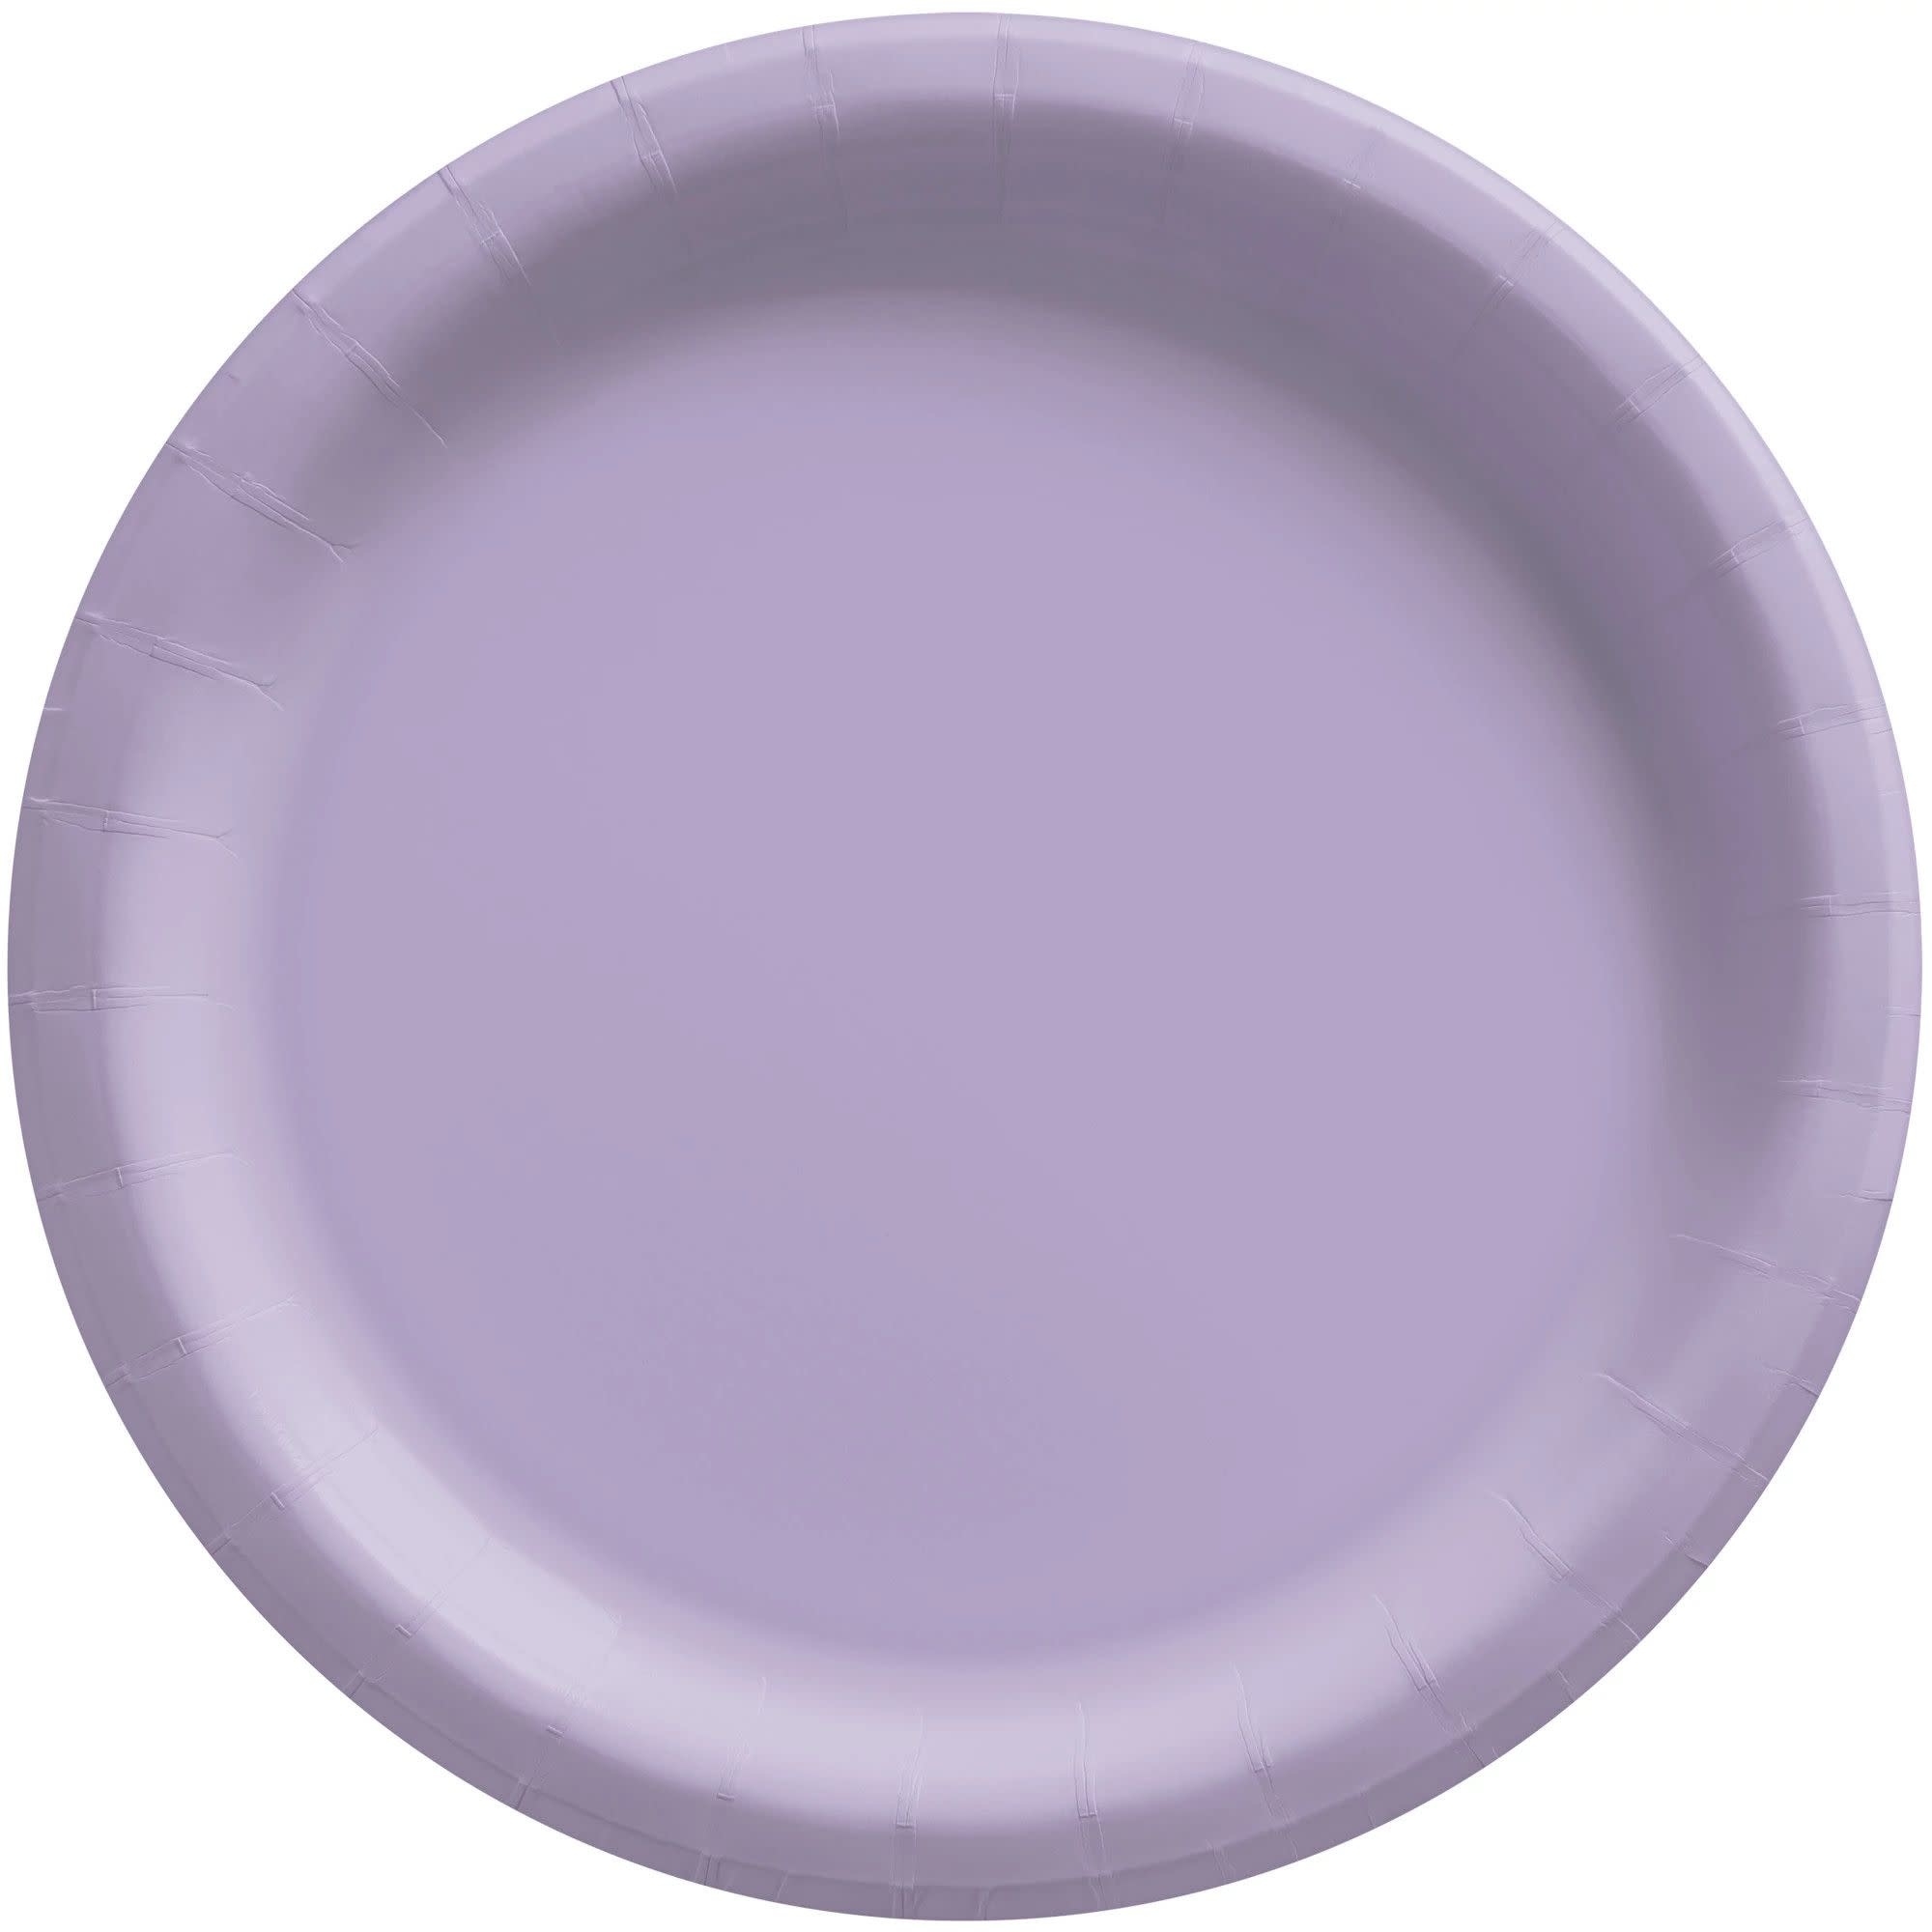 8 1/2" Round Paper Plates, Mid Ct. - Lavender